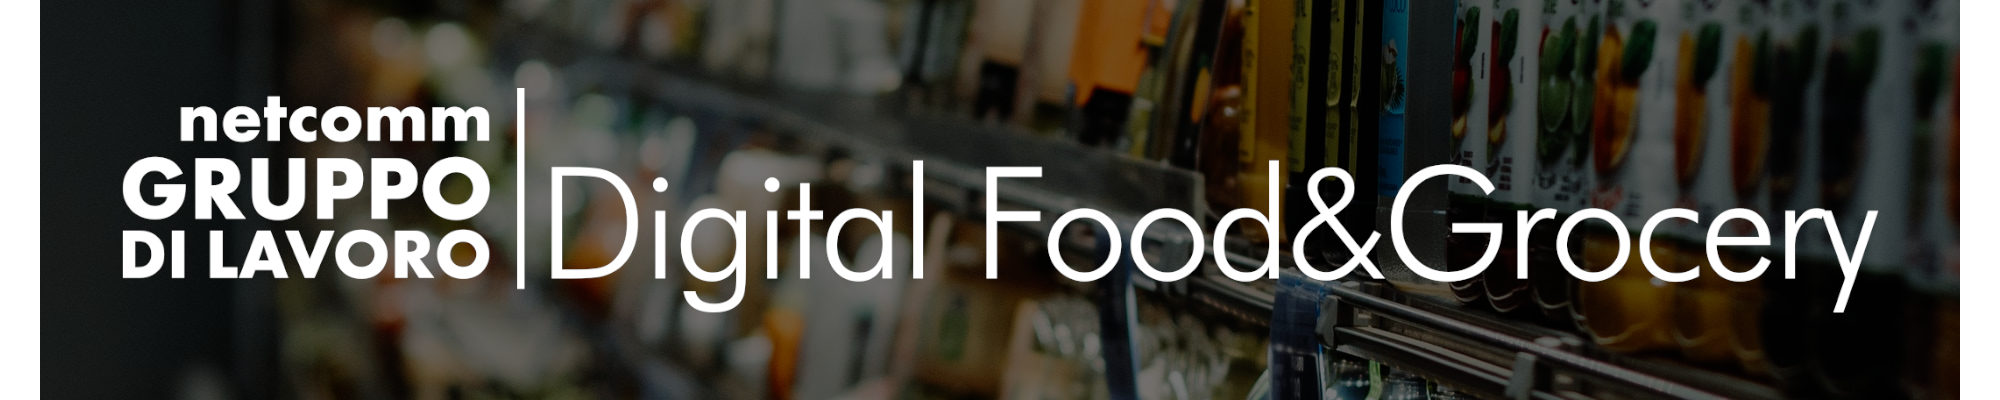 Scenario Digital Food & Grocery